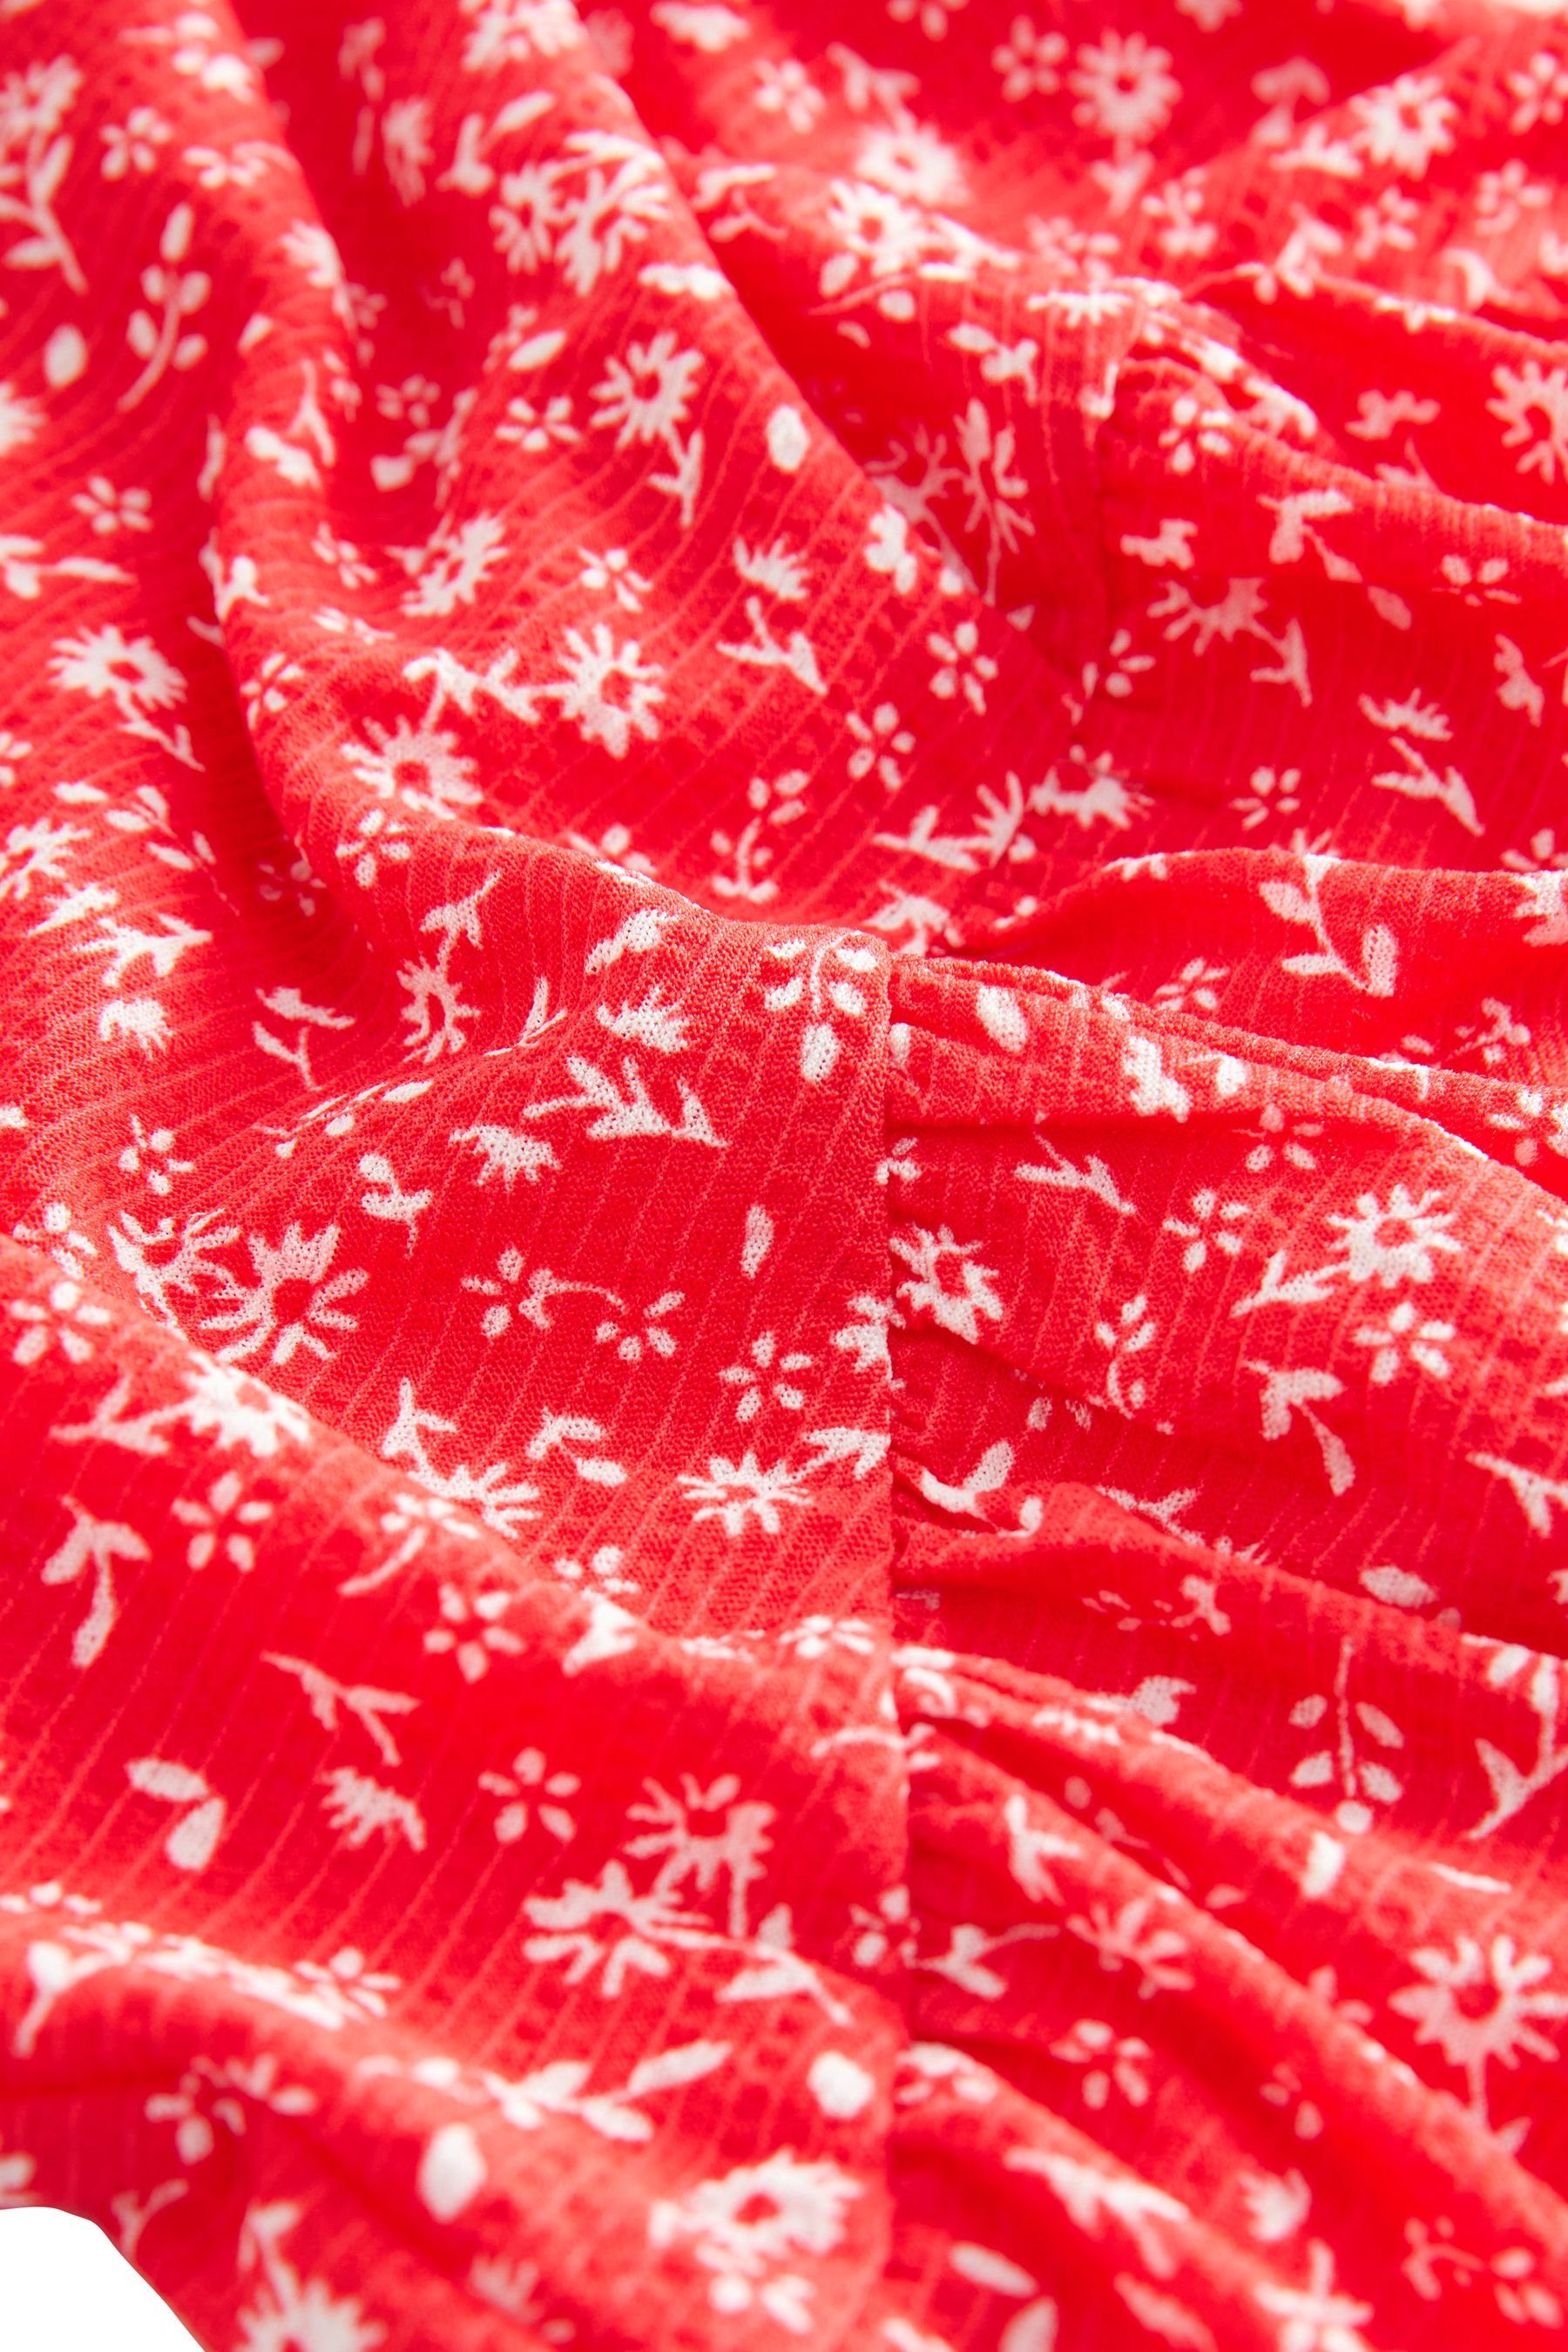 in Kleid Kurzärmeliges Red Next Jerseykleid Floral (1-tlg) Knitteroptik aus Jersey Ditsy